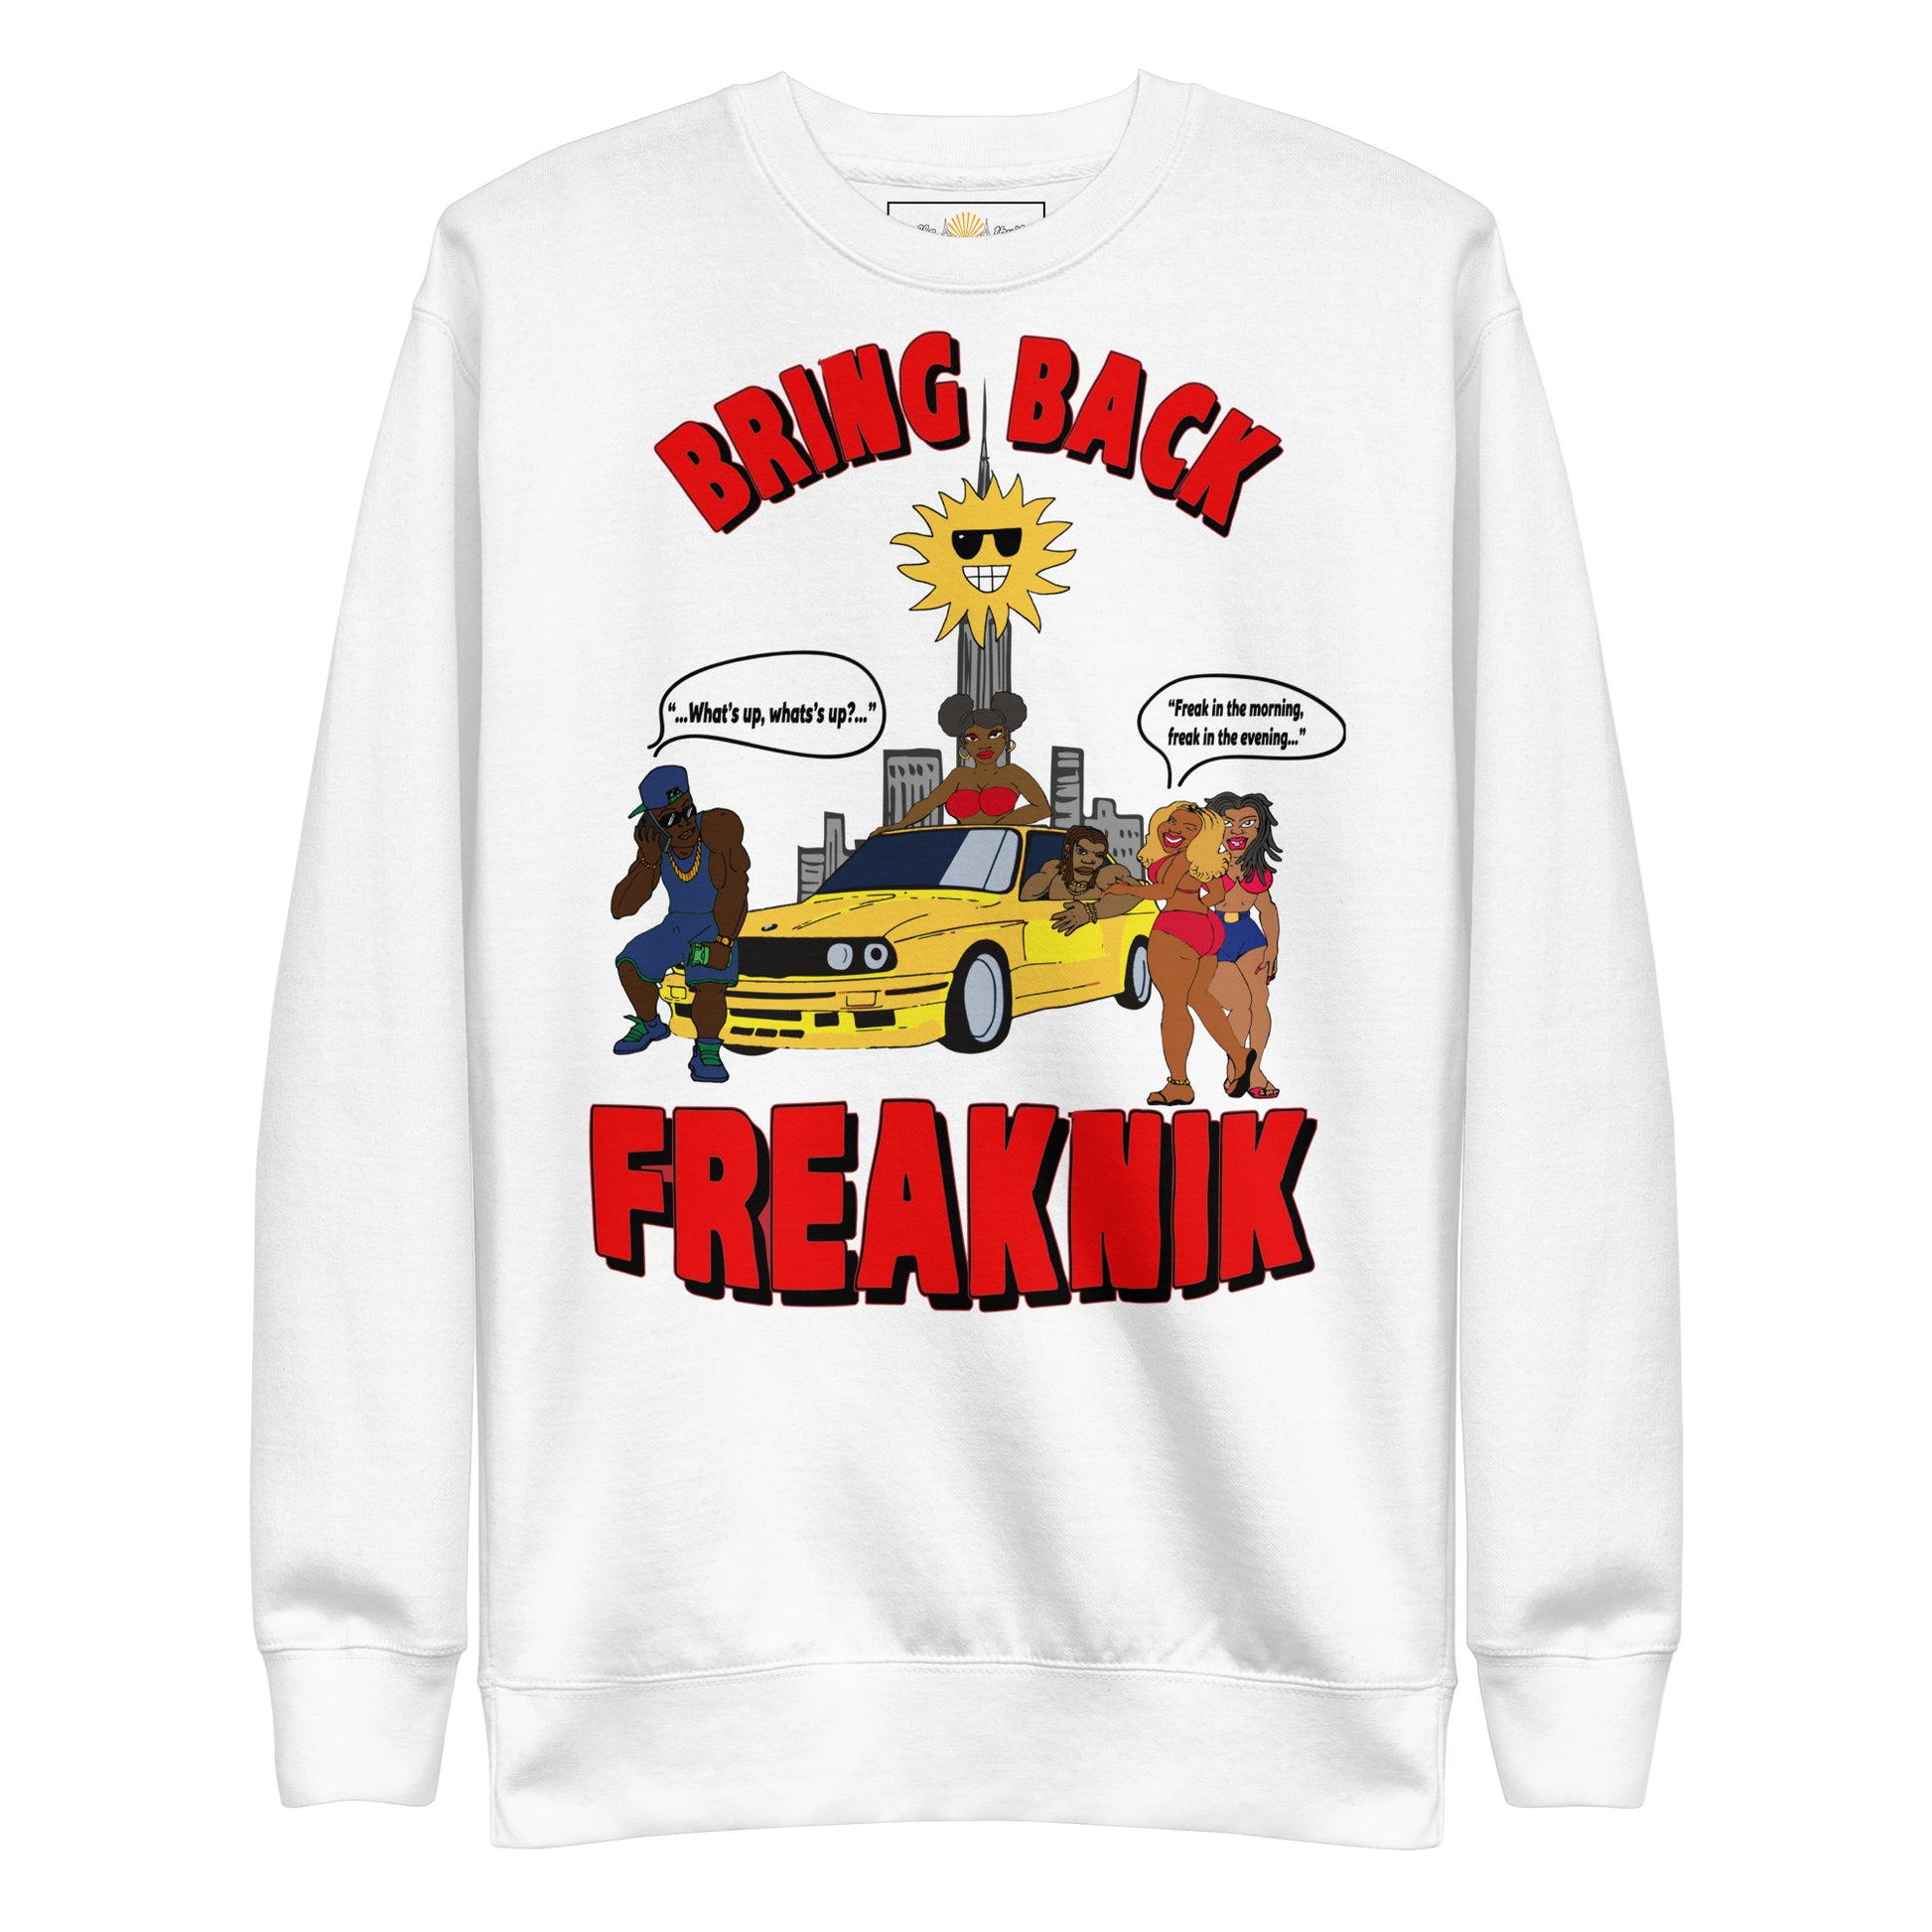 White crewneck sweatshirt with Bring Back Freaknik graphic logo